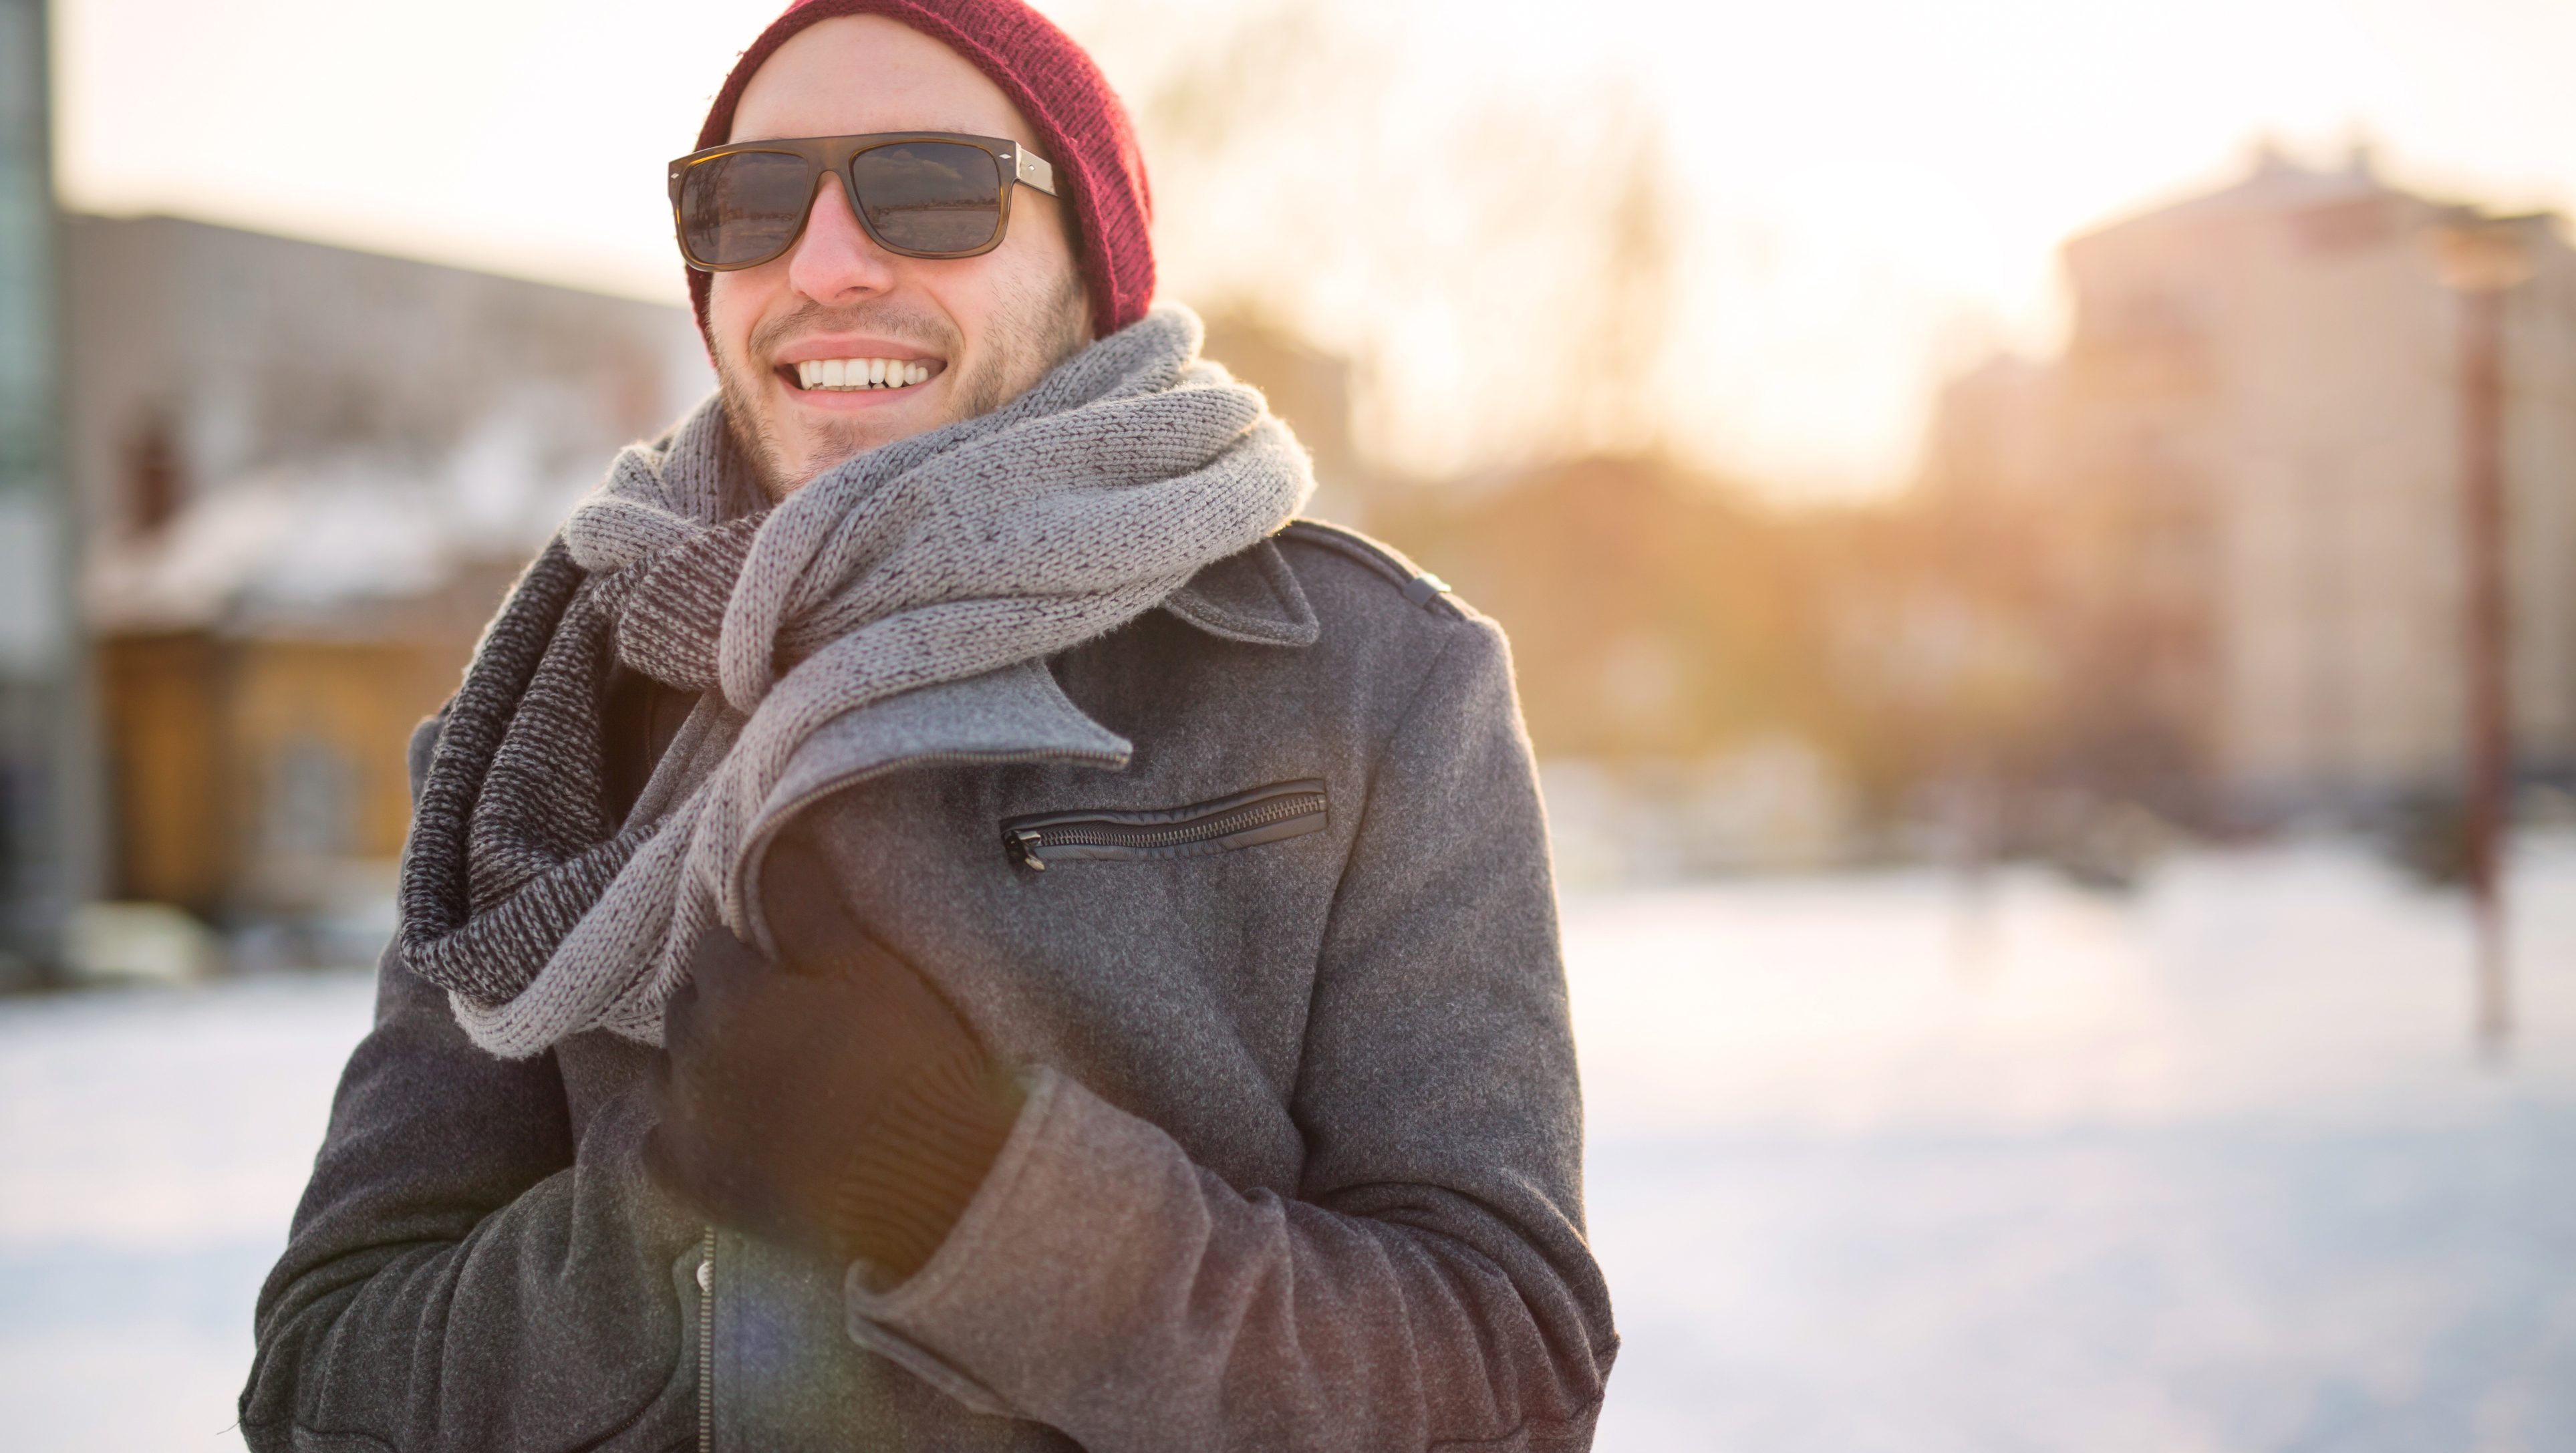 9 good reasons to wear sunglasses in winter